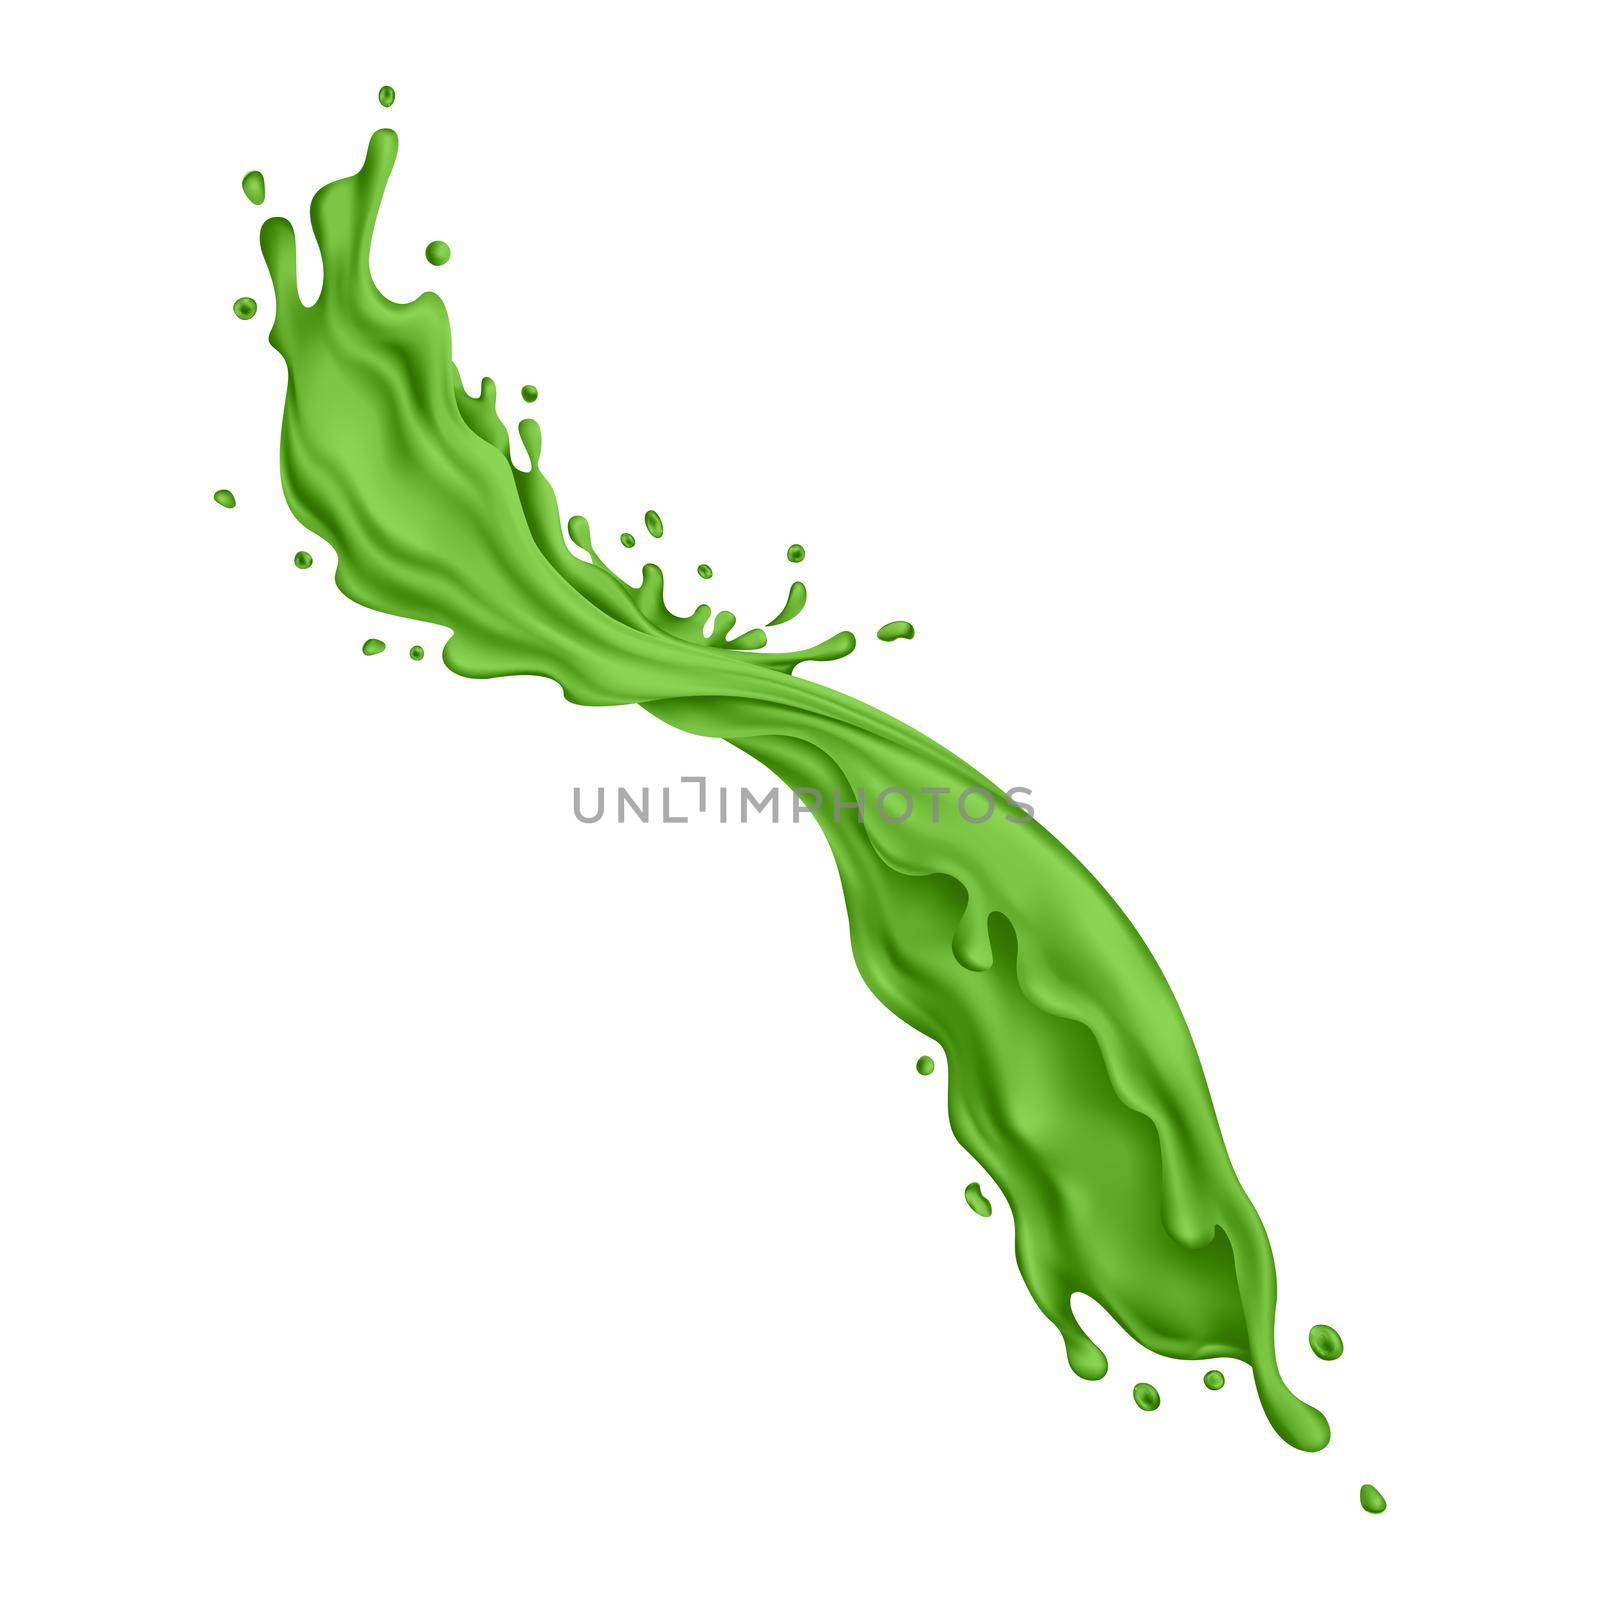 Green juice dynamic splash. Illustration in realistic style.